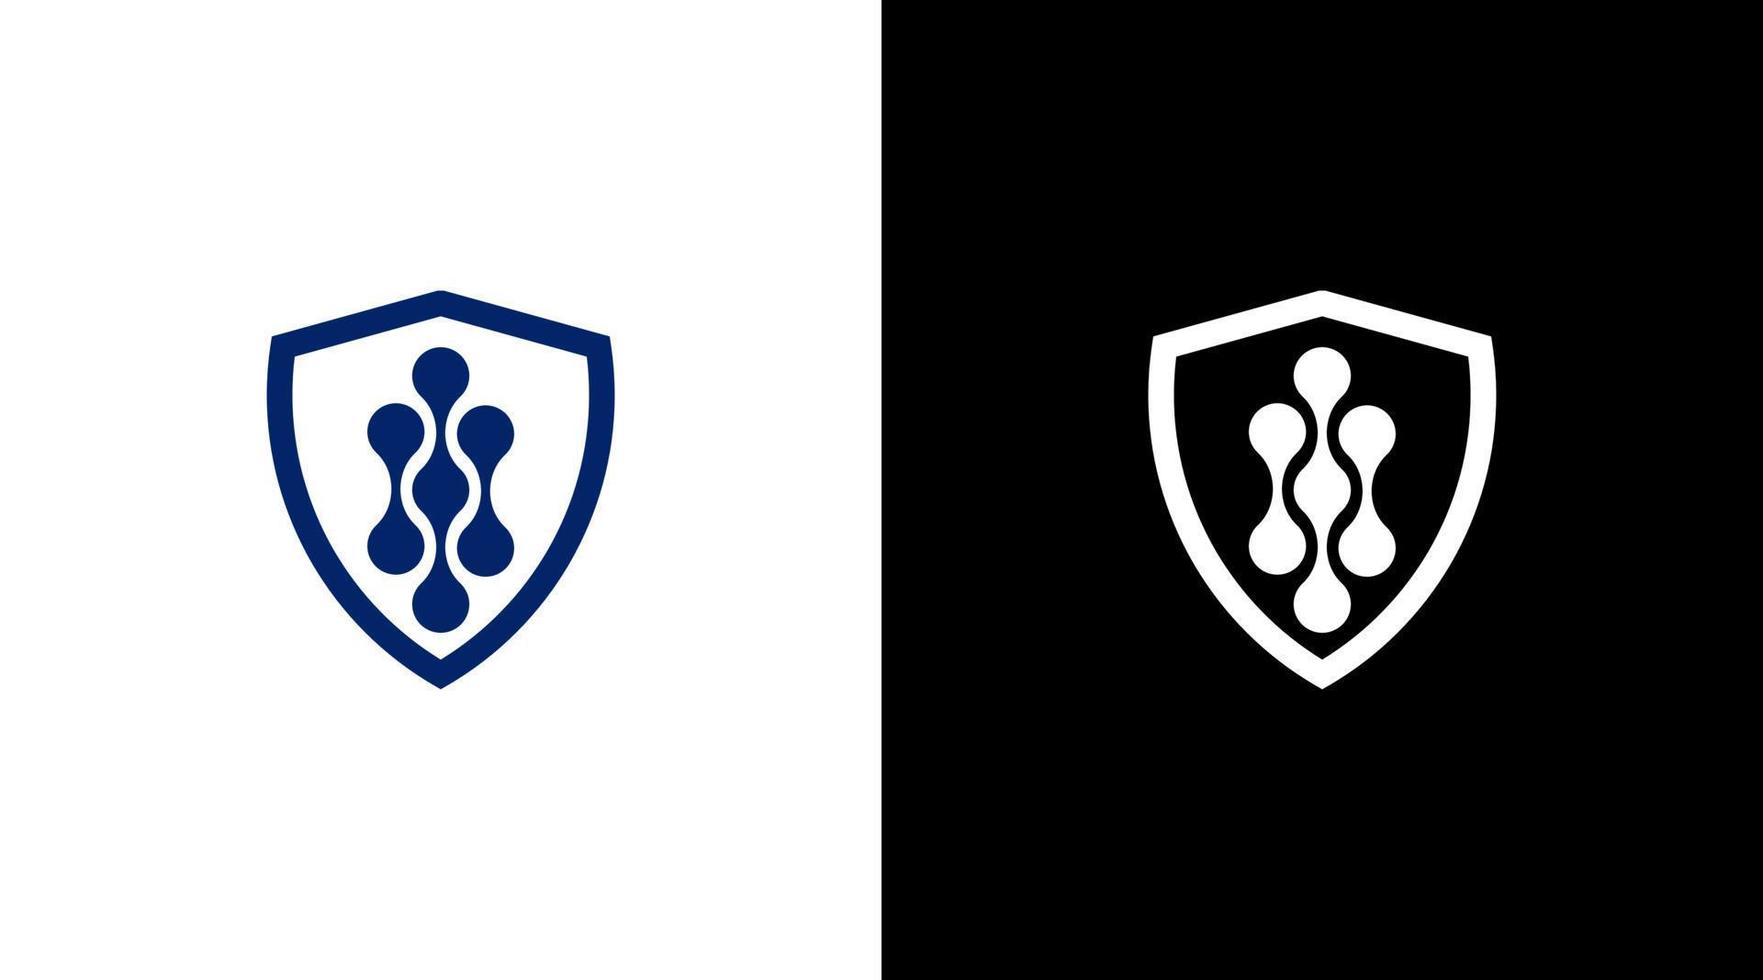 technology futuristic security shield logo icon Design template vector